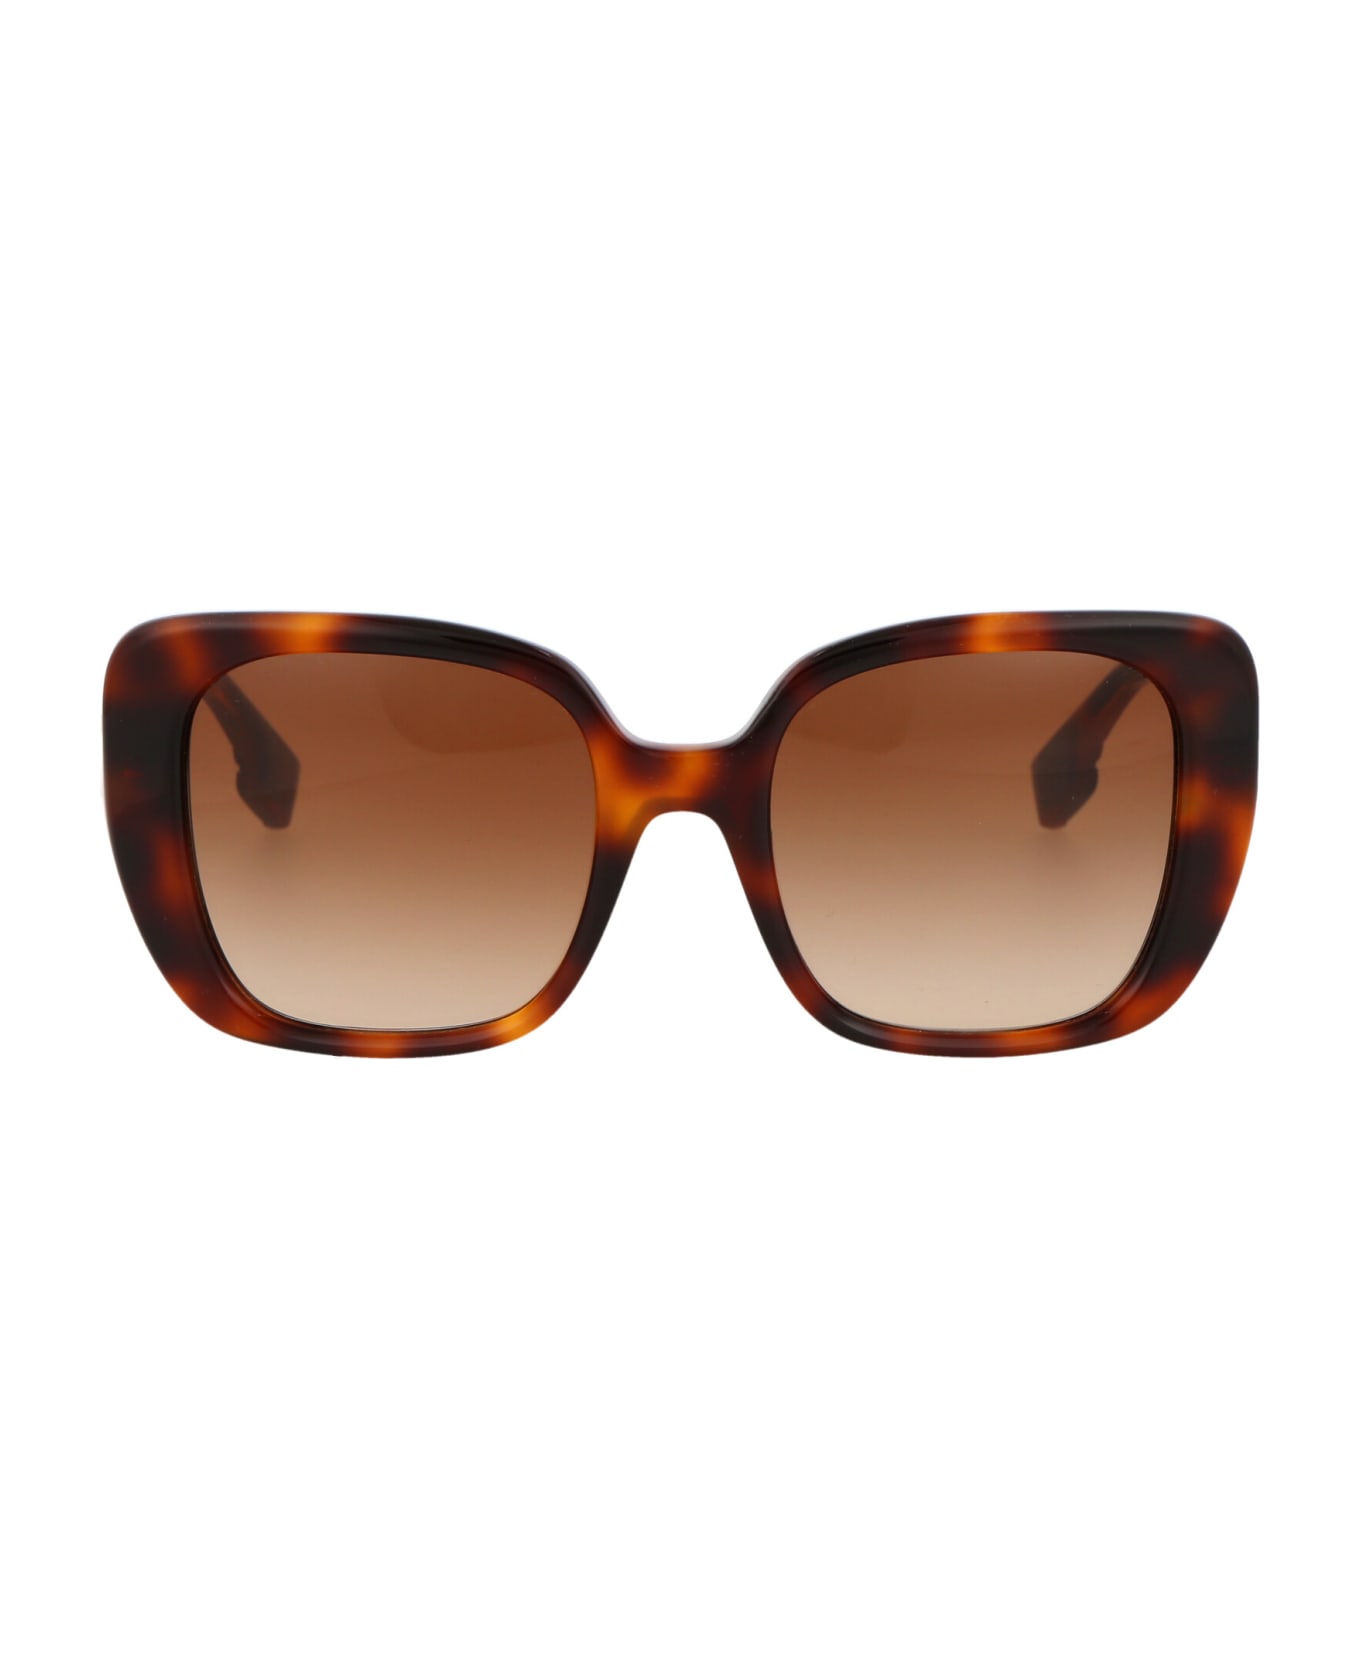 Burberry Eyewear Helena Sunglasses - 331613 LIGHT HAVANA サングラス